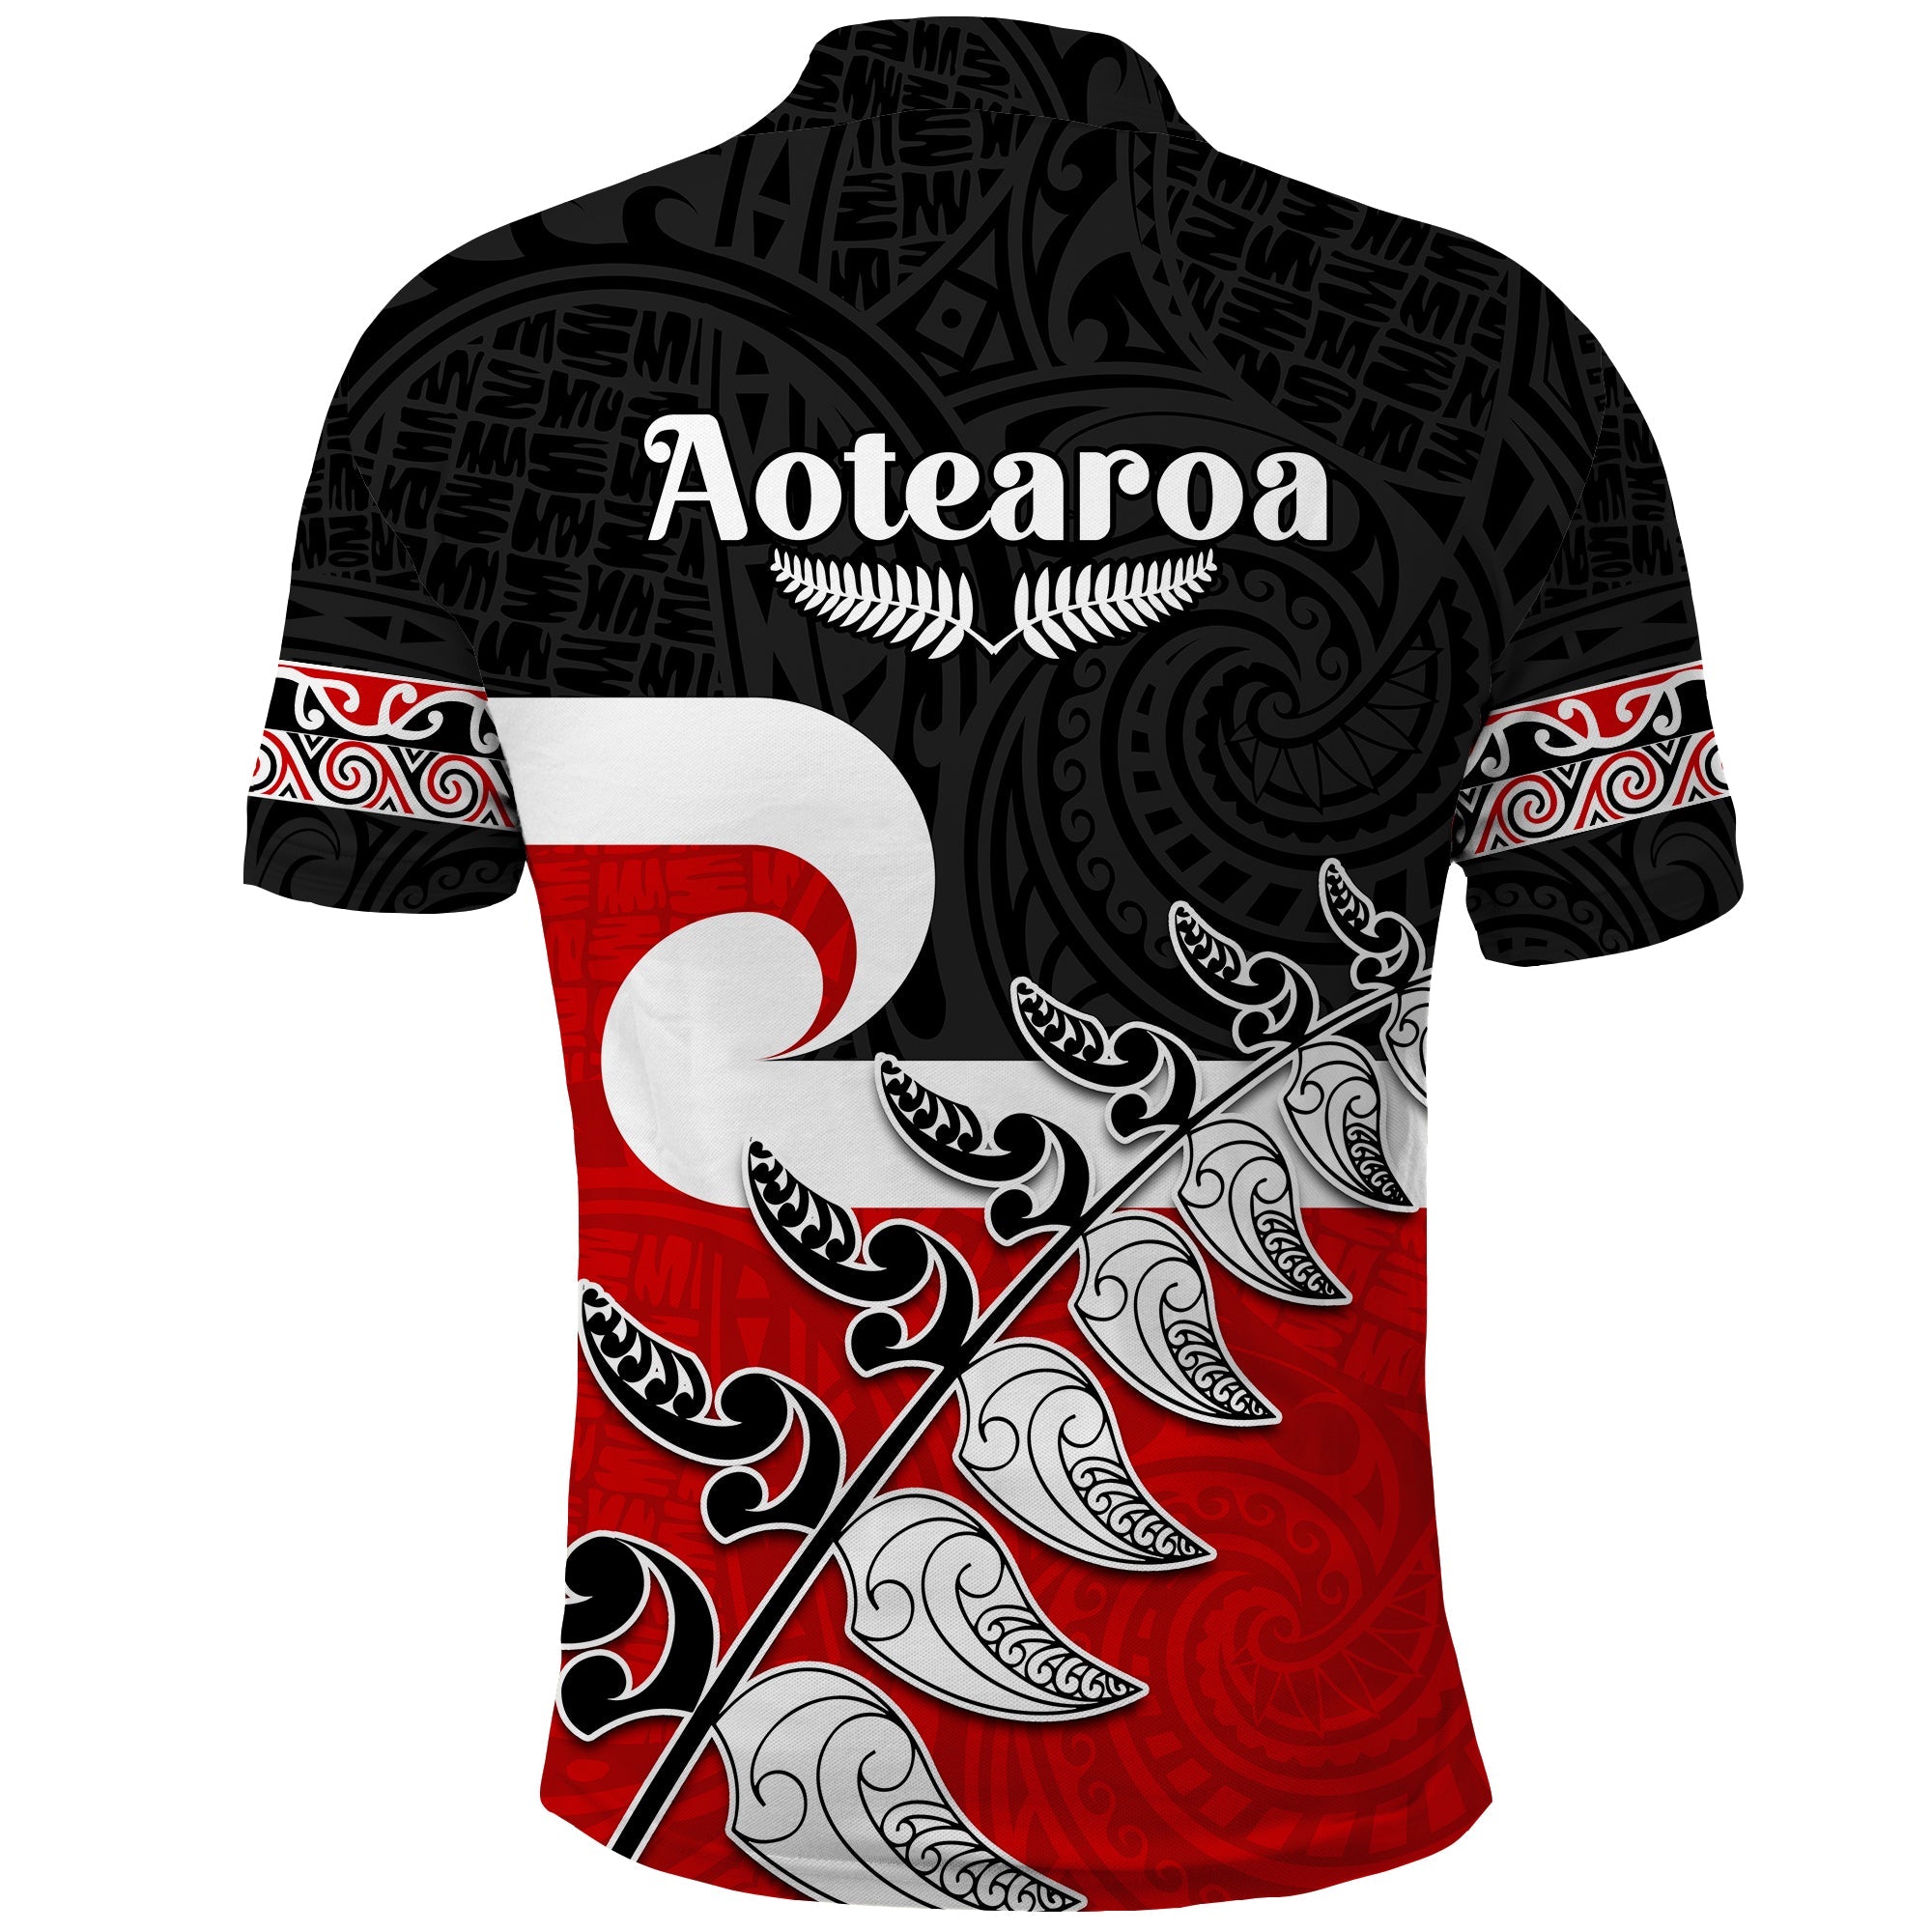 waitangi-polo-shirt-aotearoa-maori-pattern-mix-fern-and-manaia-koru